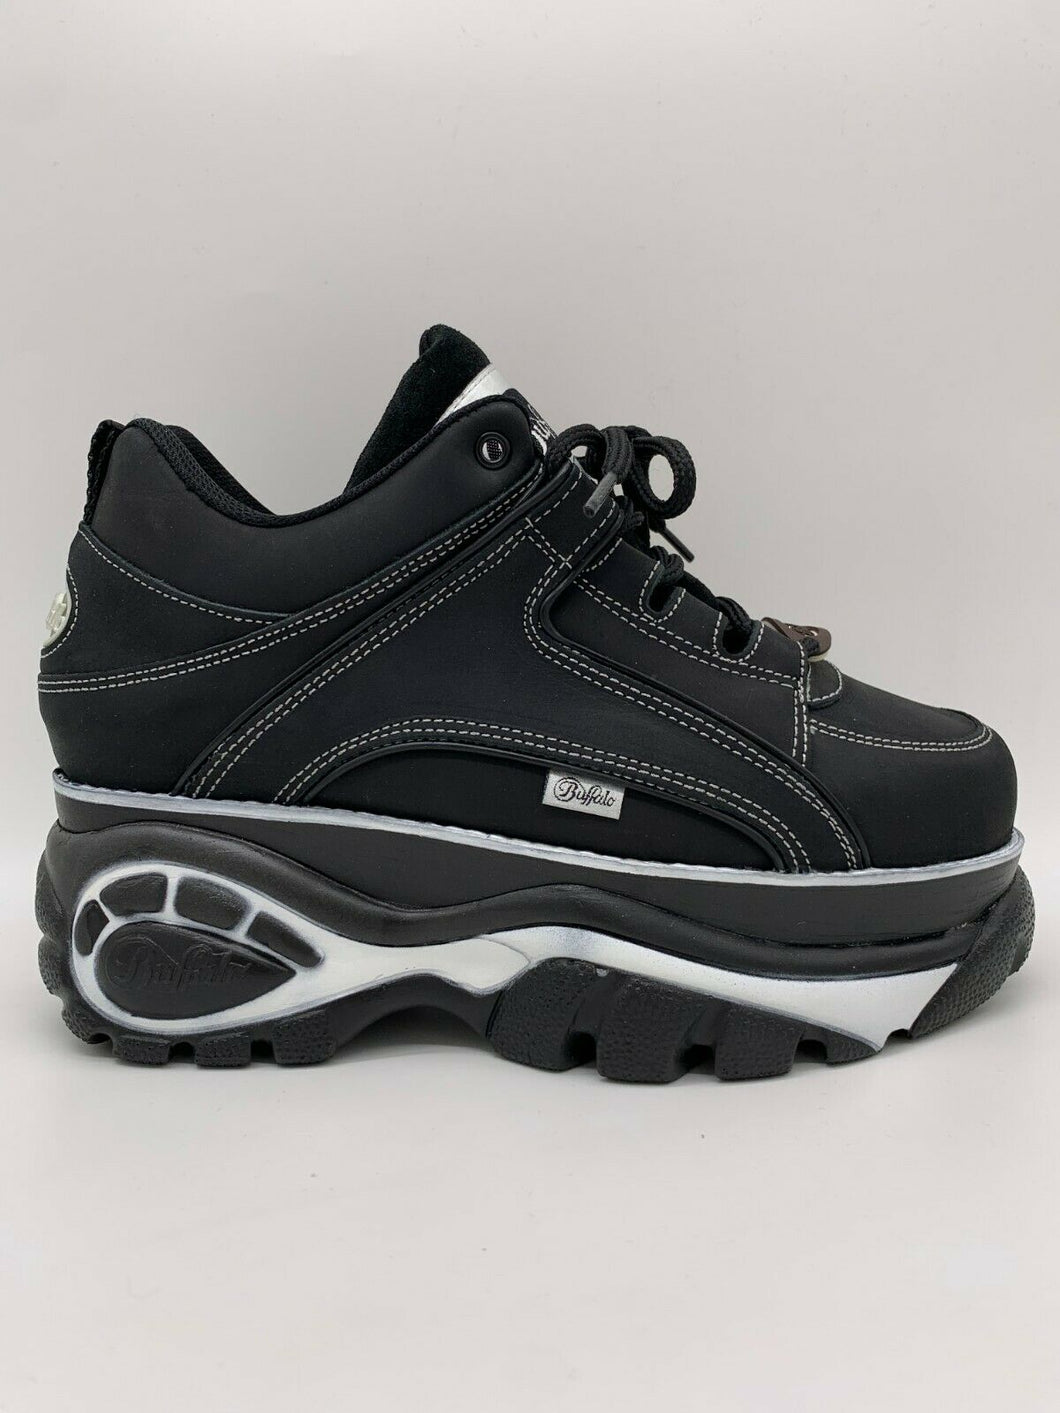 Buffalo Classic Boots Shoes Platform Shoes 90s Black White 1339-14